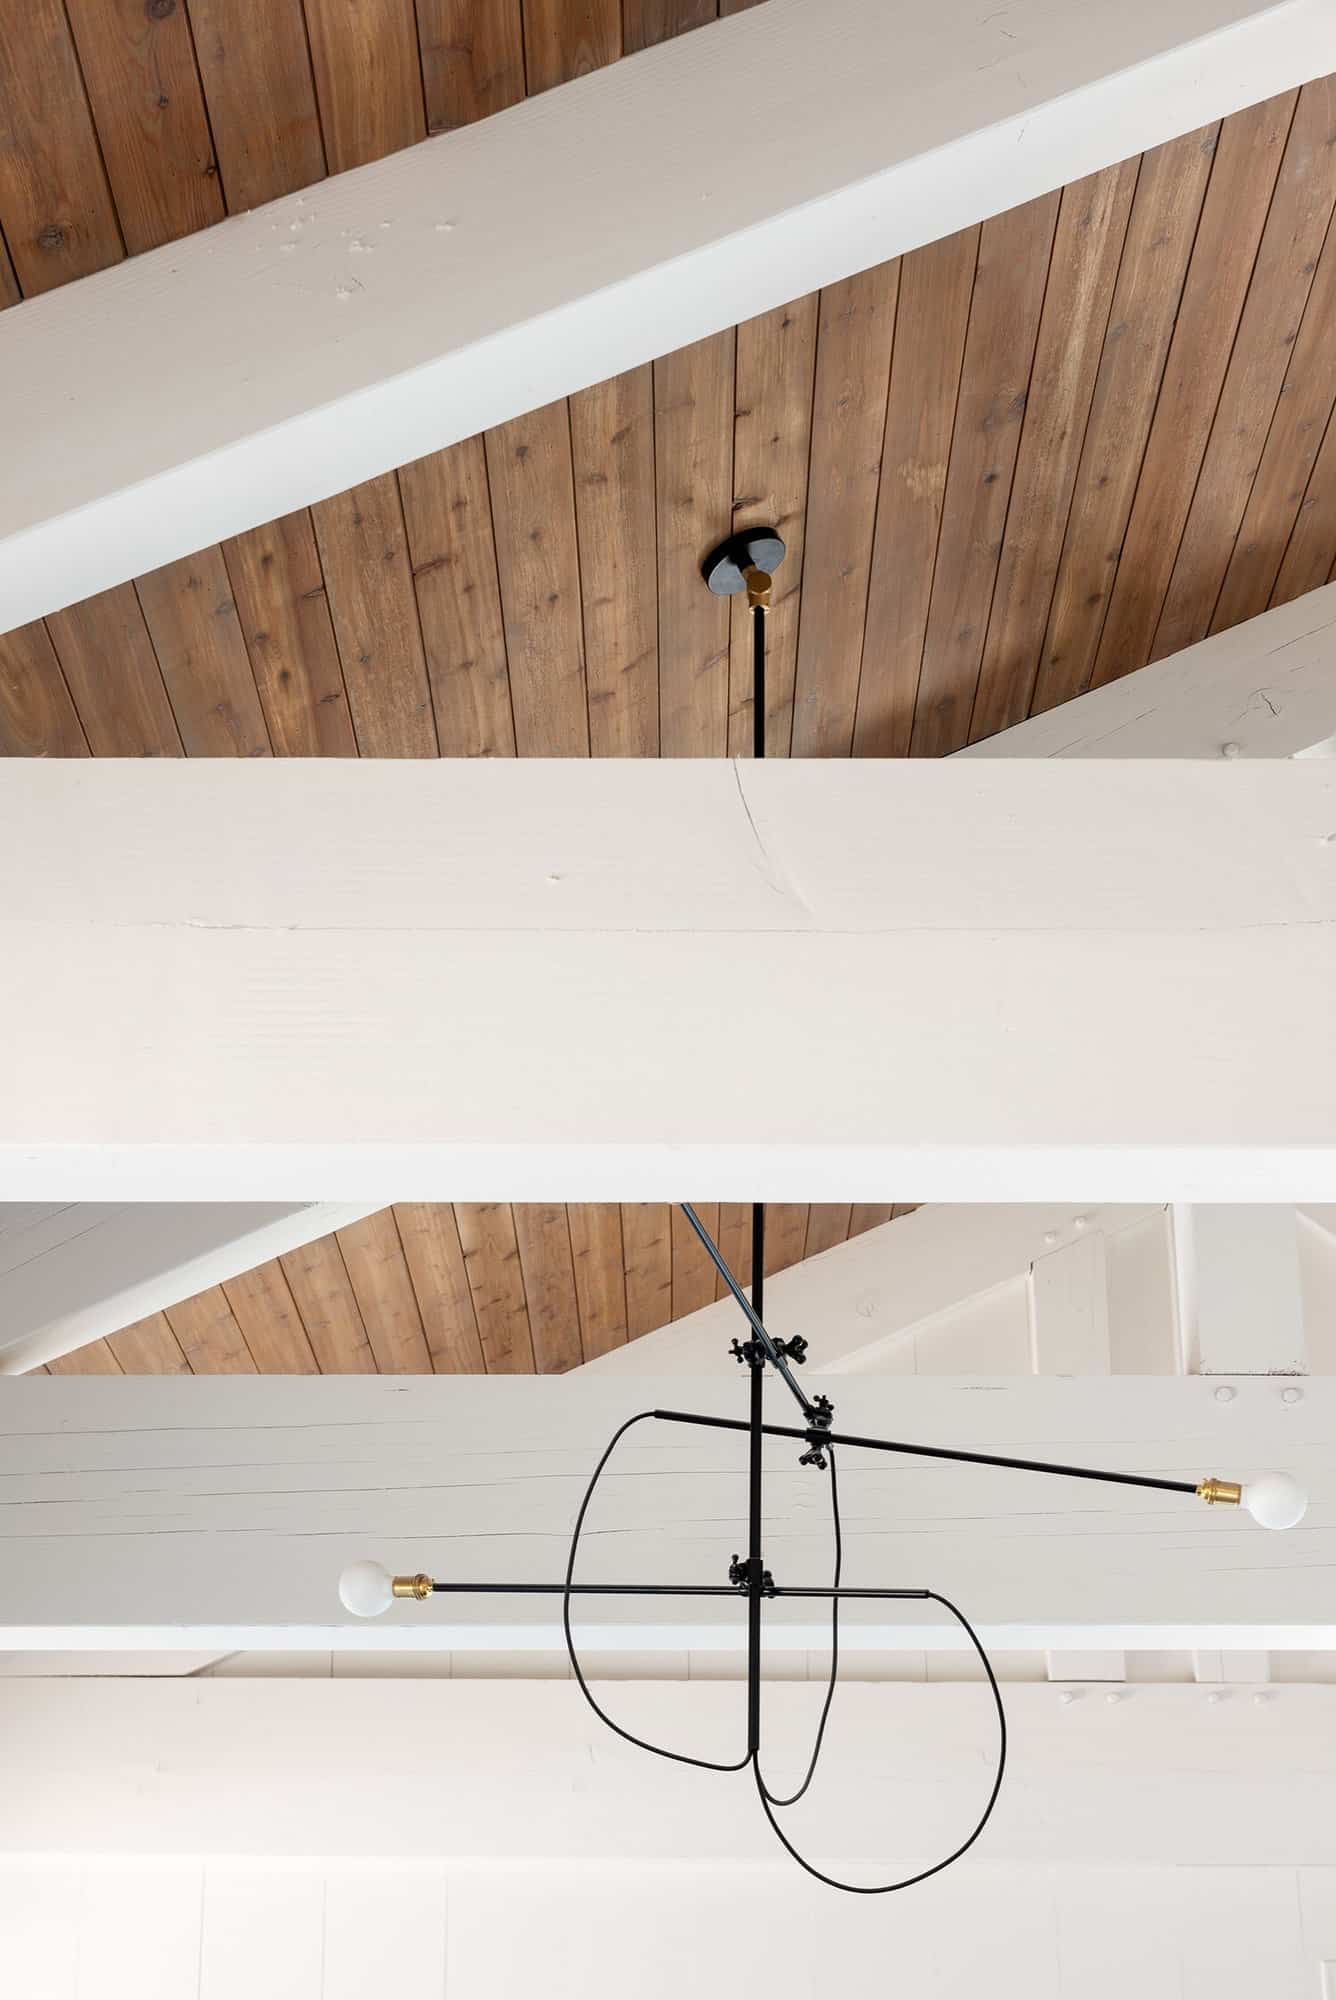 contemporary-entertainment-barn-ceiling-light-fixture